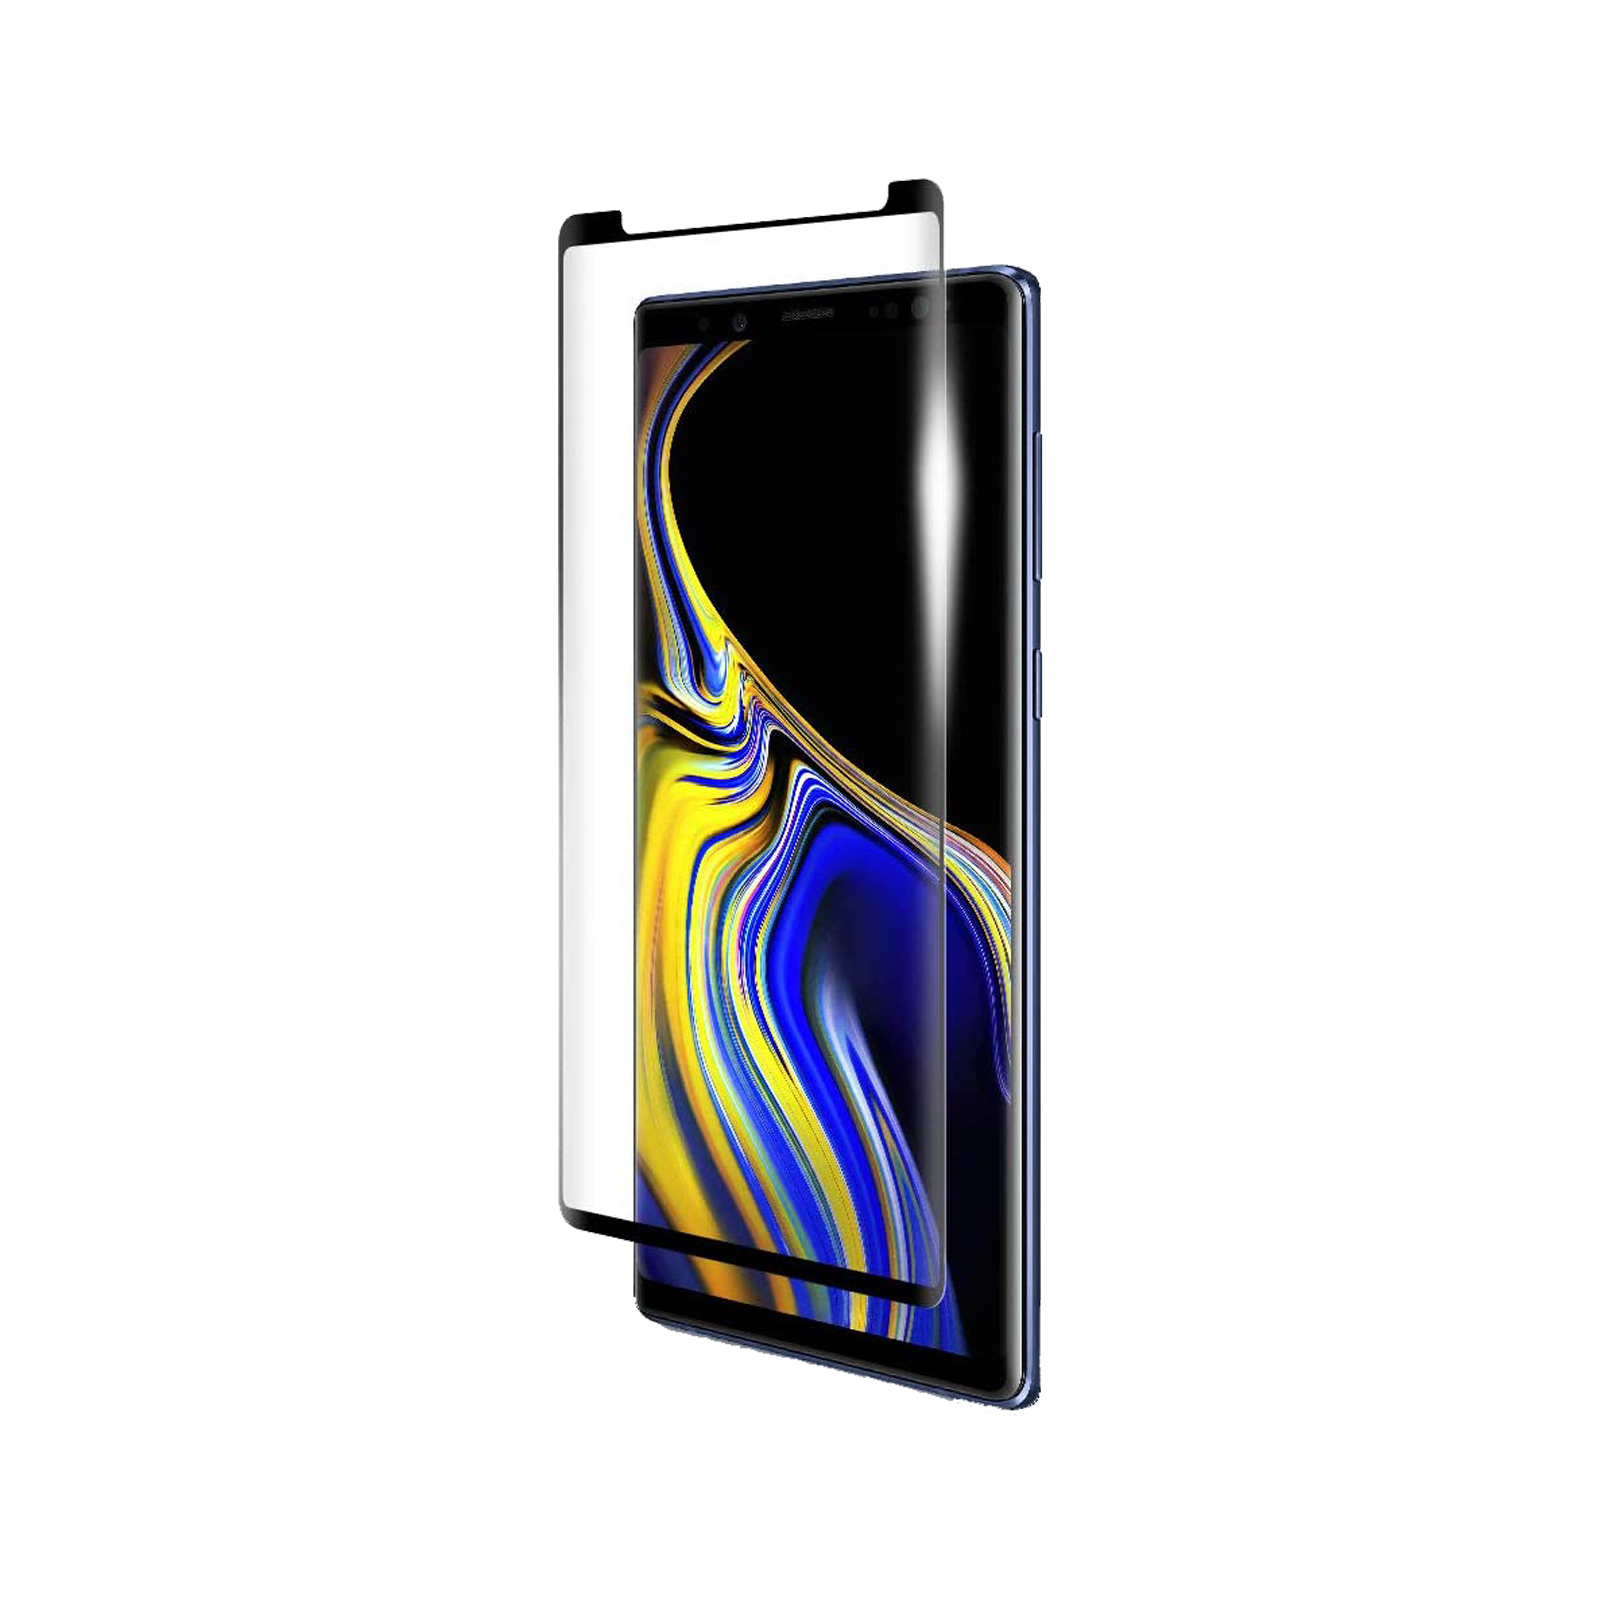 Bodyguardz Prtx Samsung Galaxy Note 9 Screen Protector [Brand New]